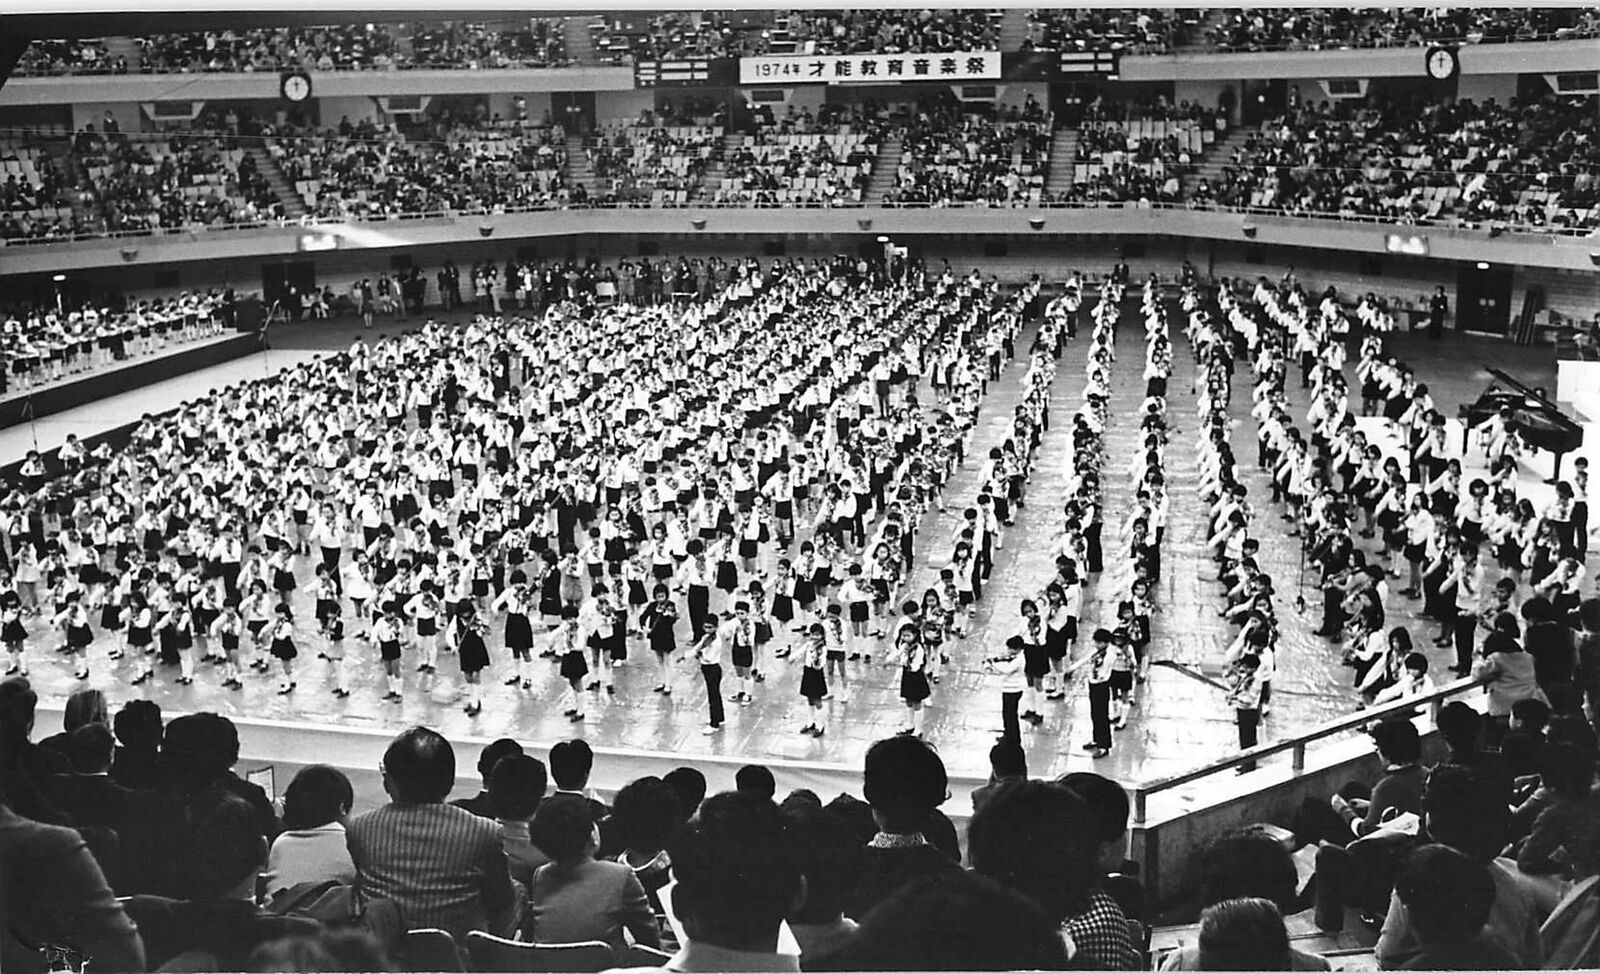 1974 Press Photo 3000 Kids Play Violin Cello Concert Education Day Nippon Tokyo